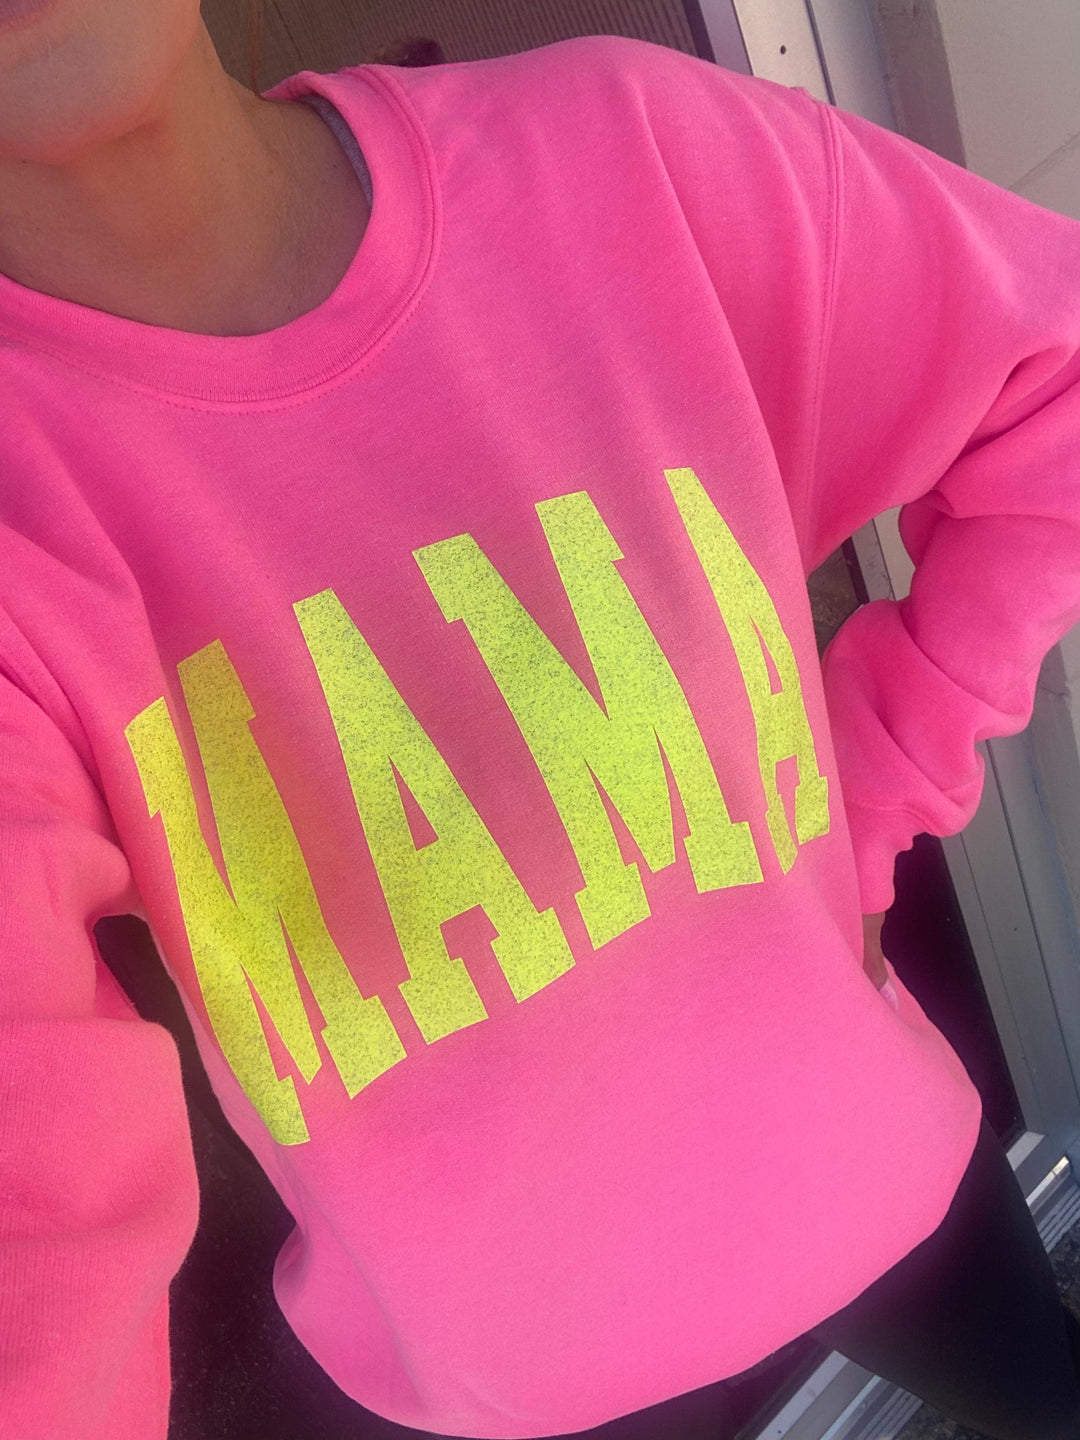 MAMA Collegiate Neon Pink Sweatshirt with Yellow Jewel Print